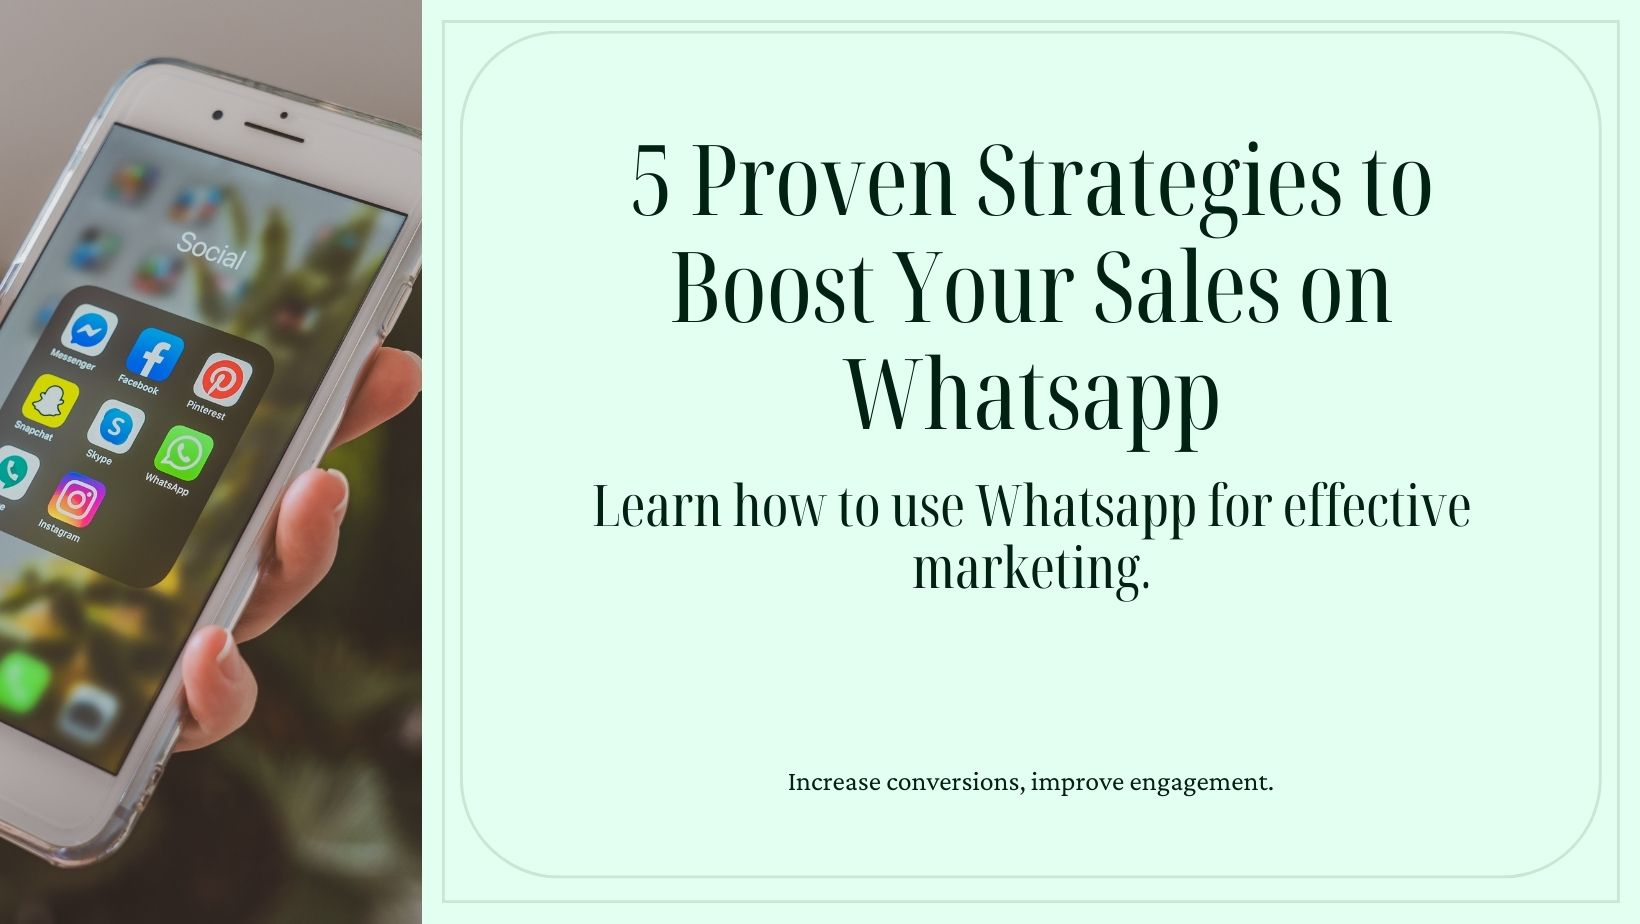 5 Proven Whatsapp Marketing Strategies To Grow Your Sales.jpg